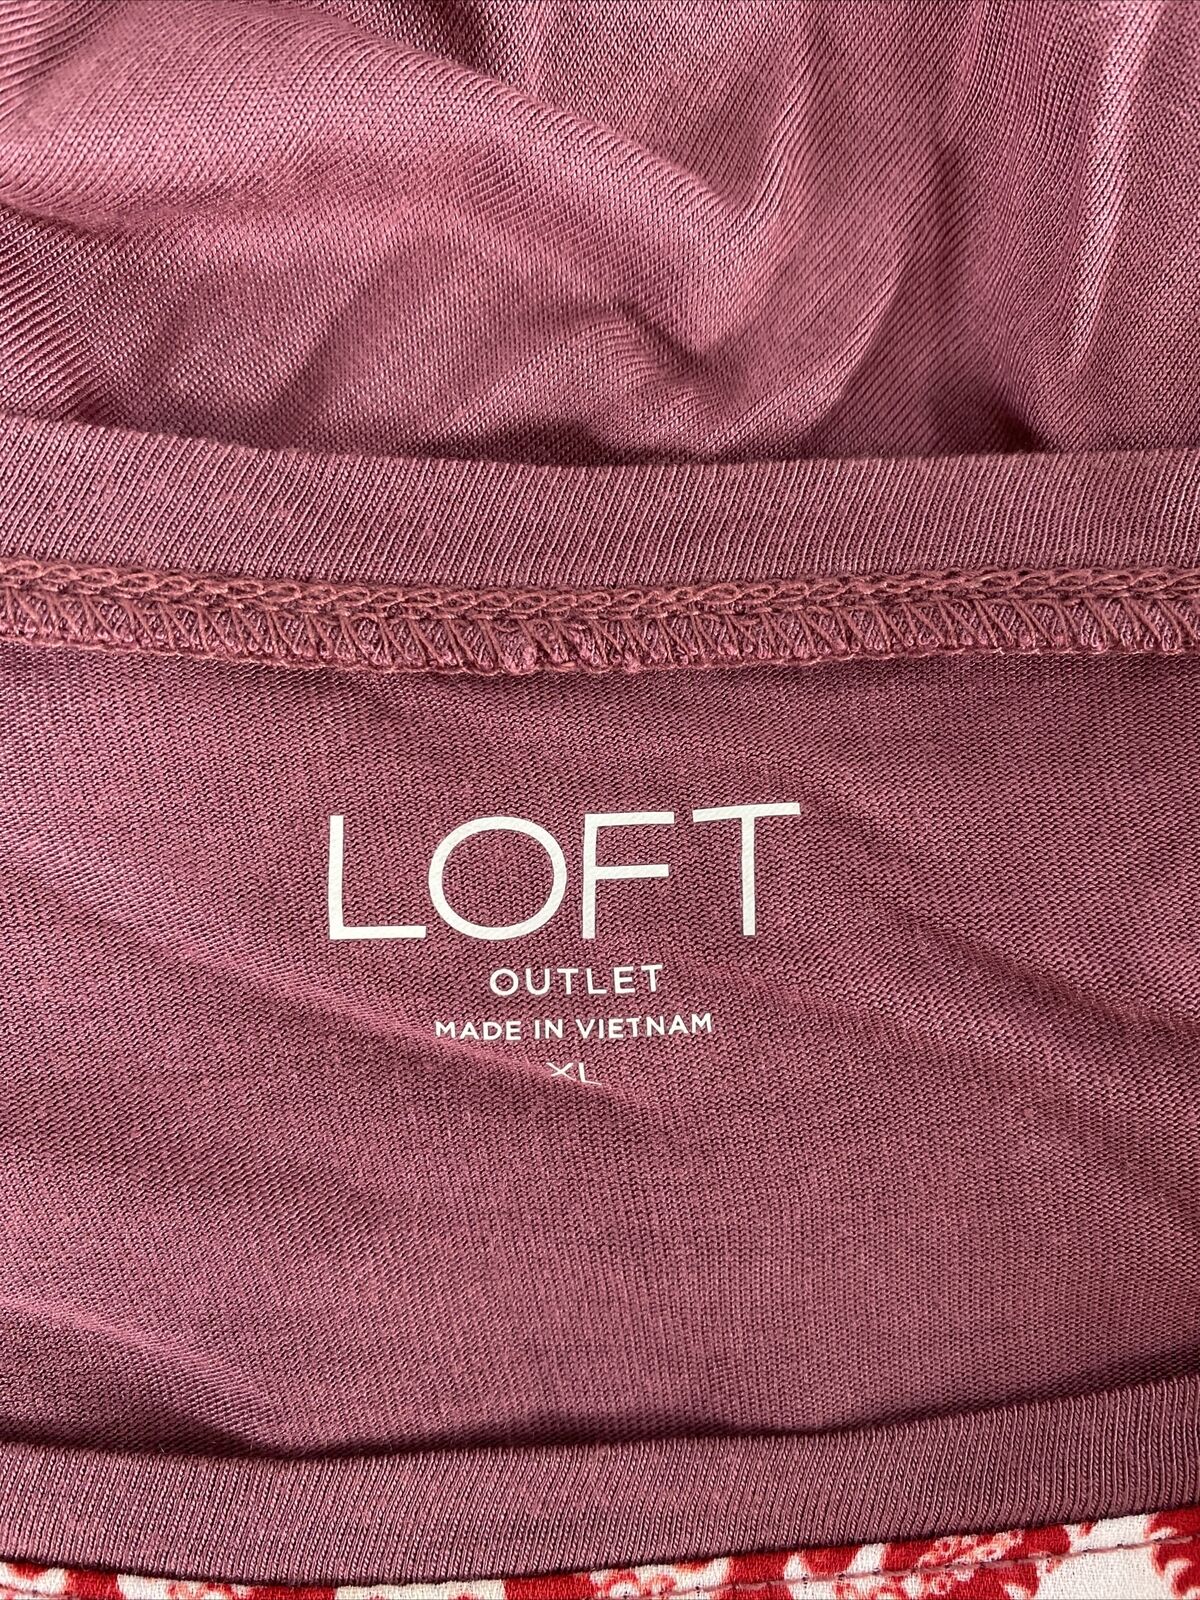 LOFT Women's Purple/Red Long Sleeve T-Shirt - XL